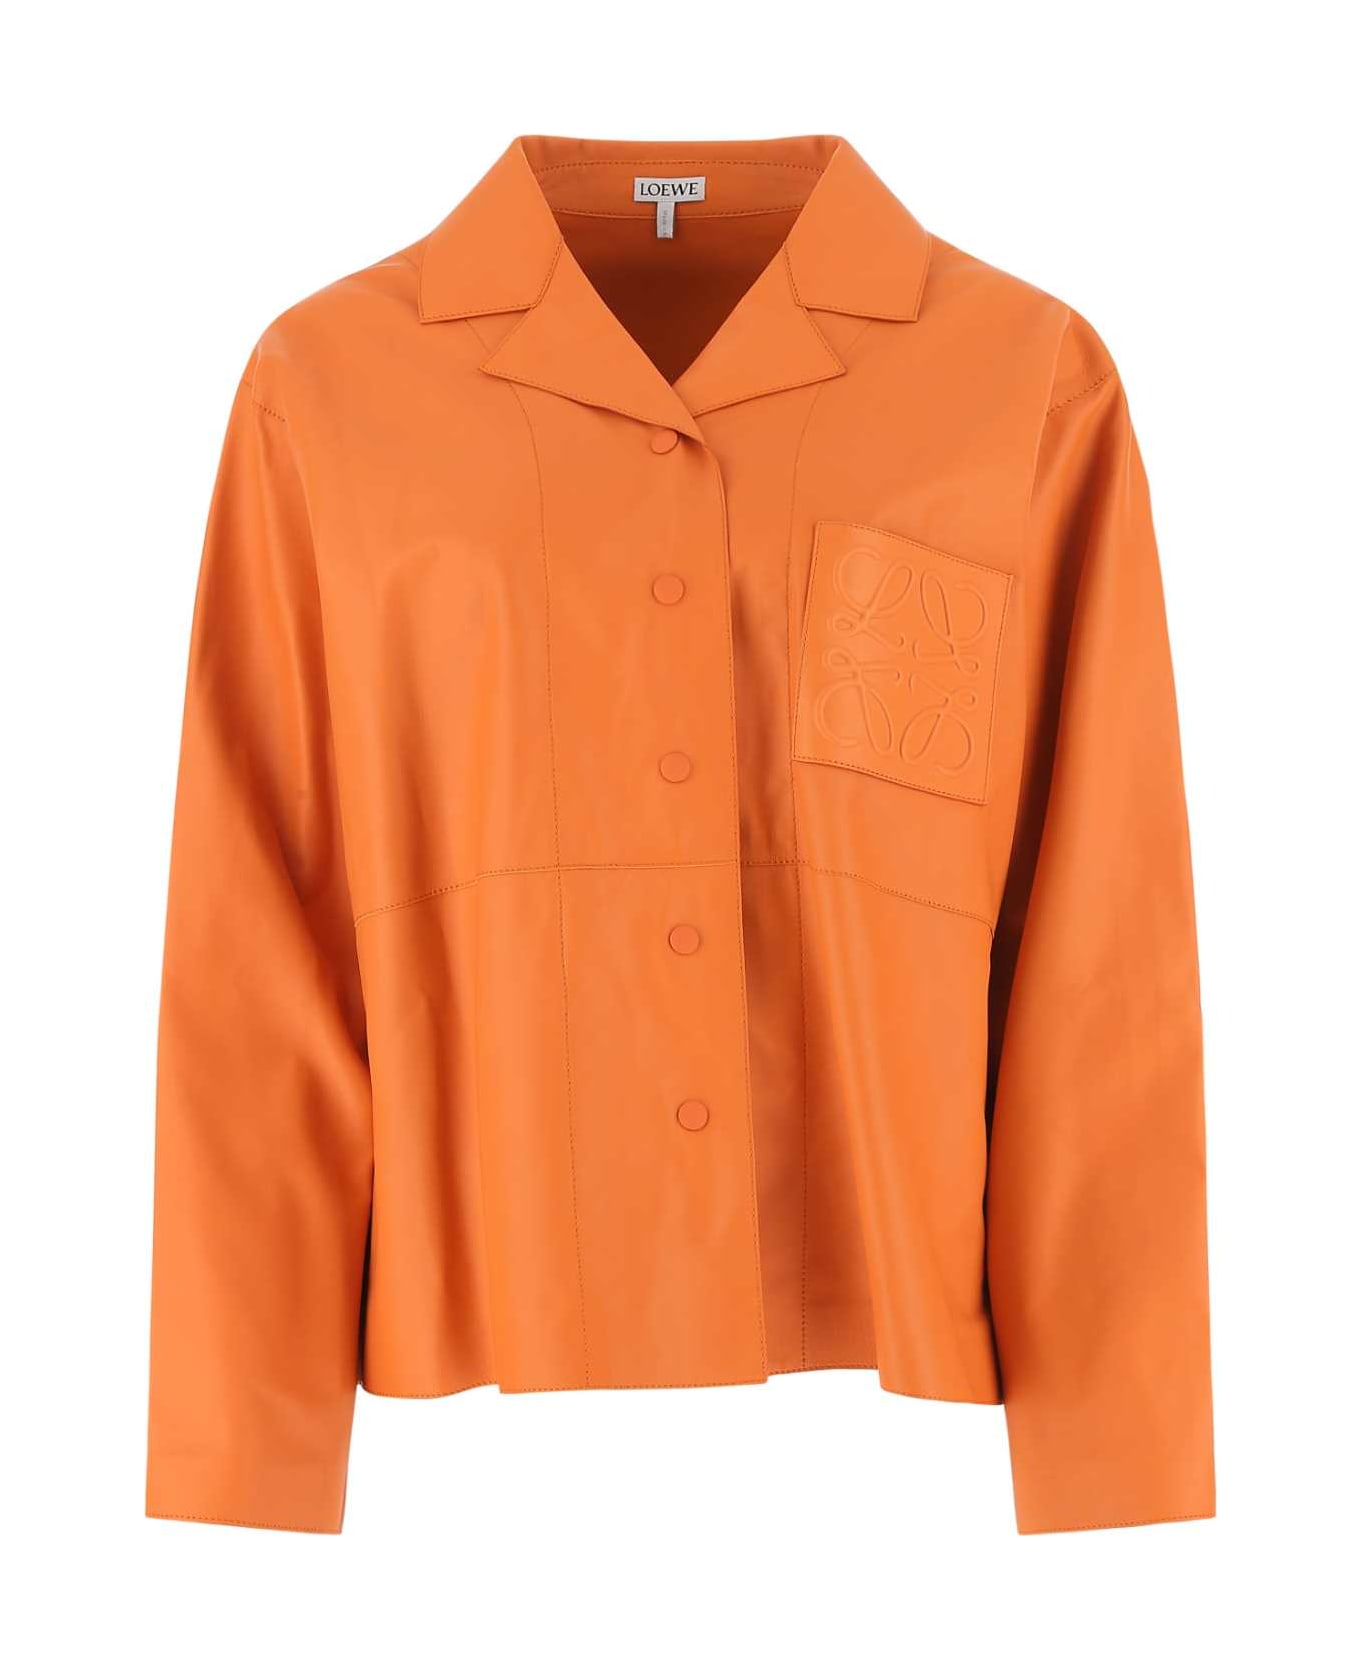 Loewe Orange Leather Oversize Shirt - ORANGE シャツ